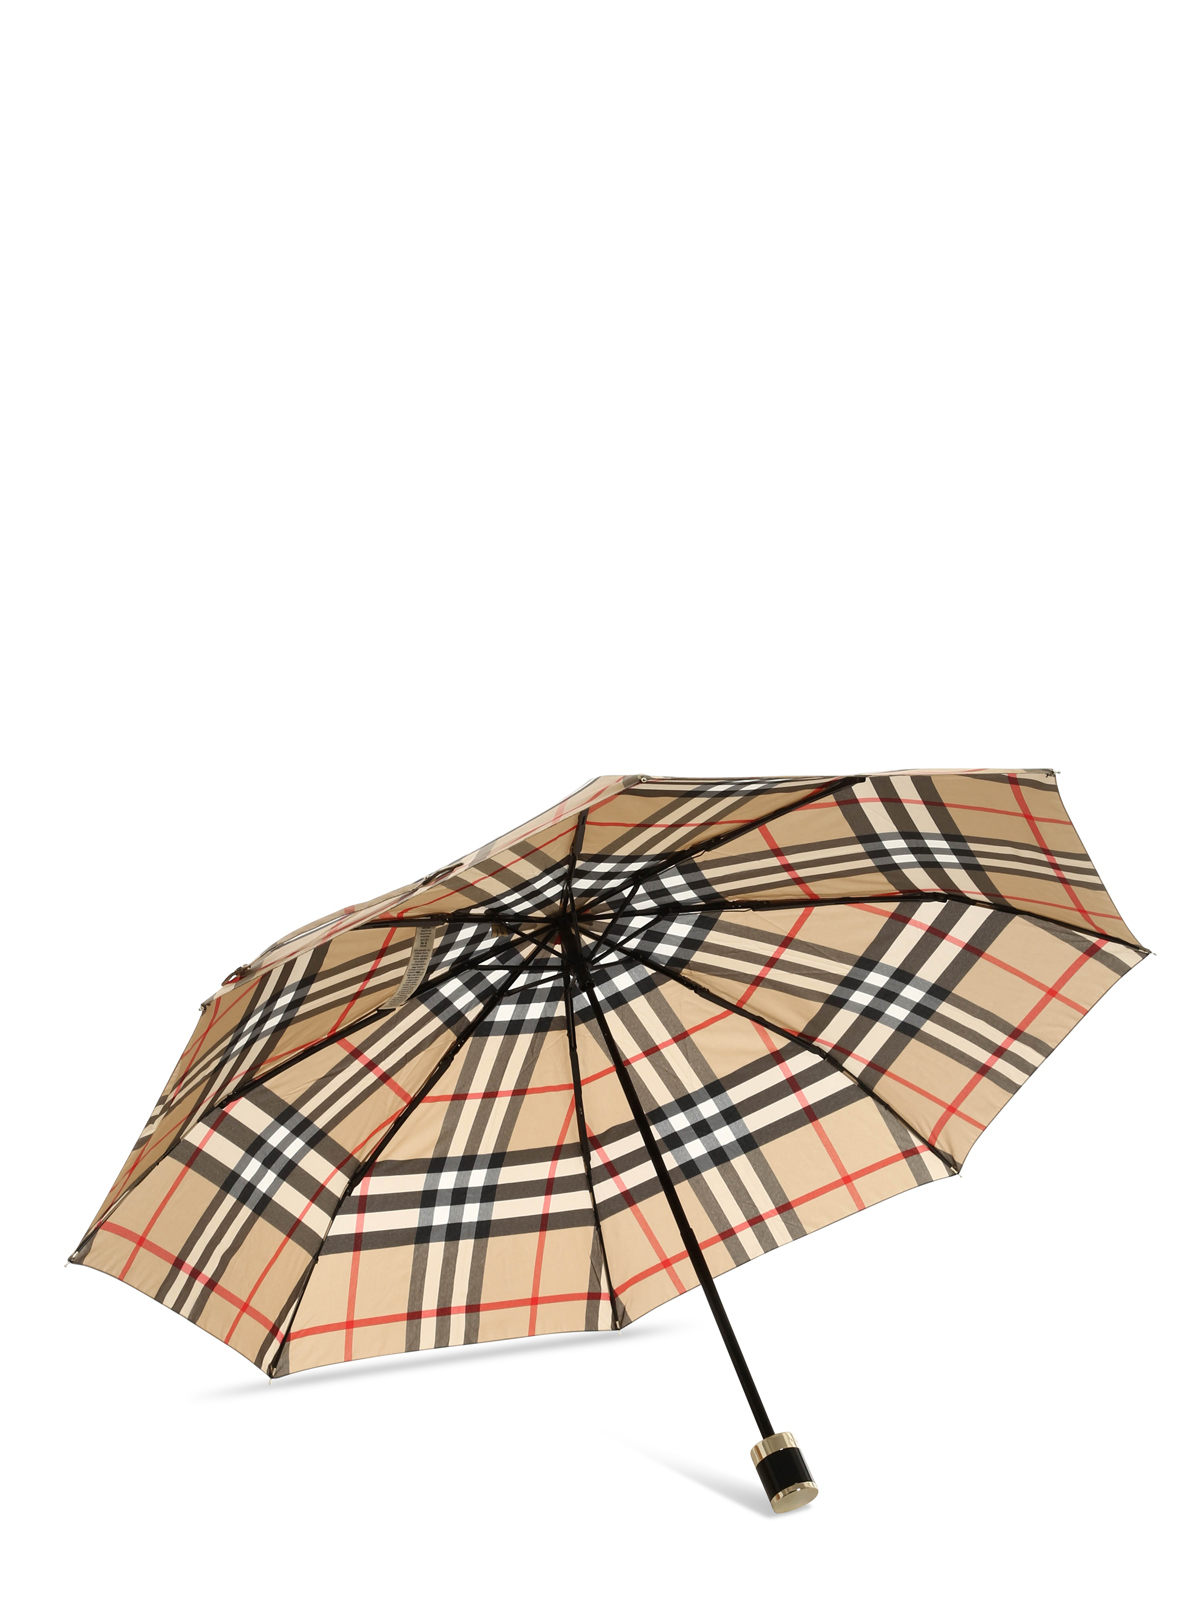 Trafalgar handle umbrella